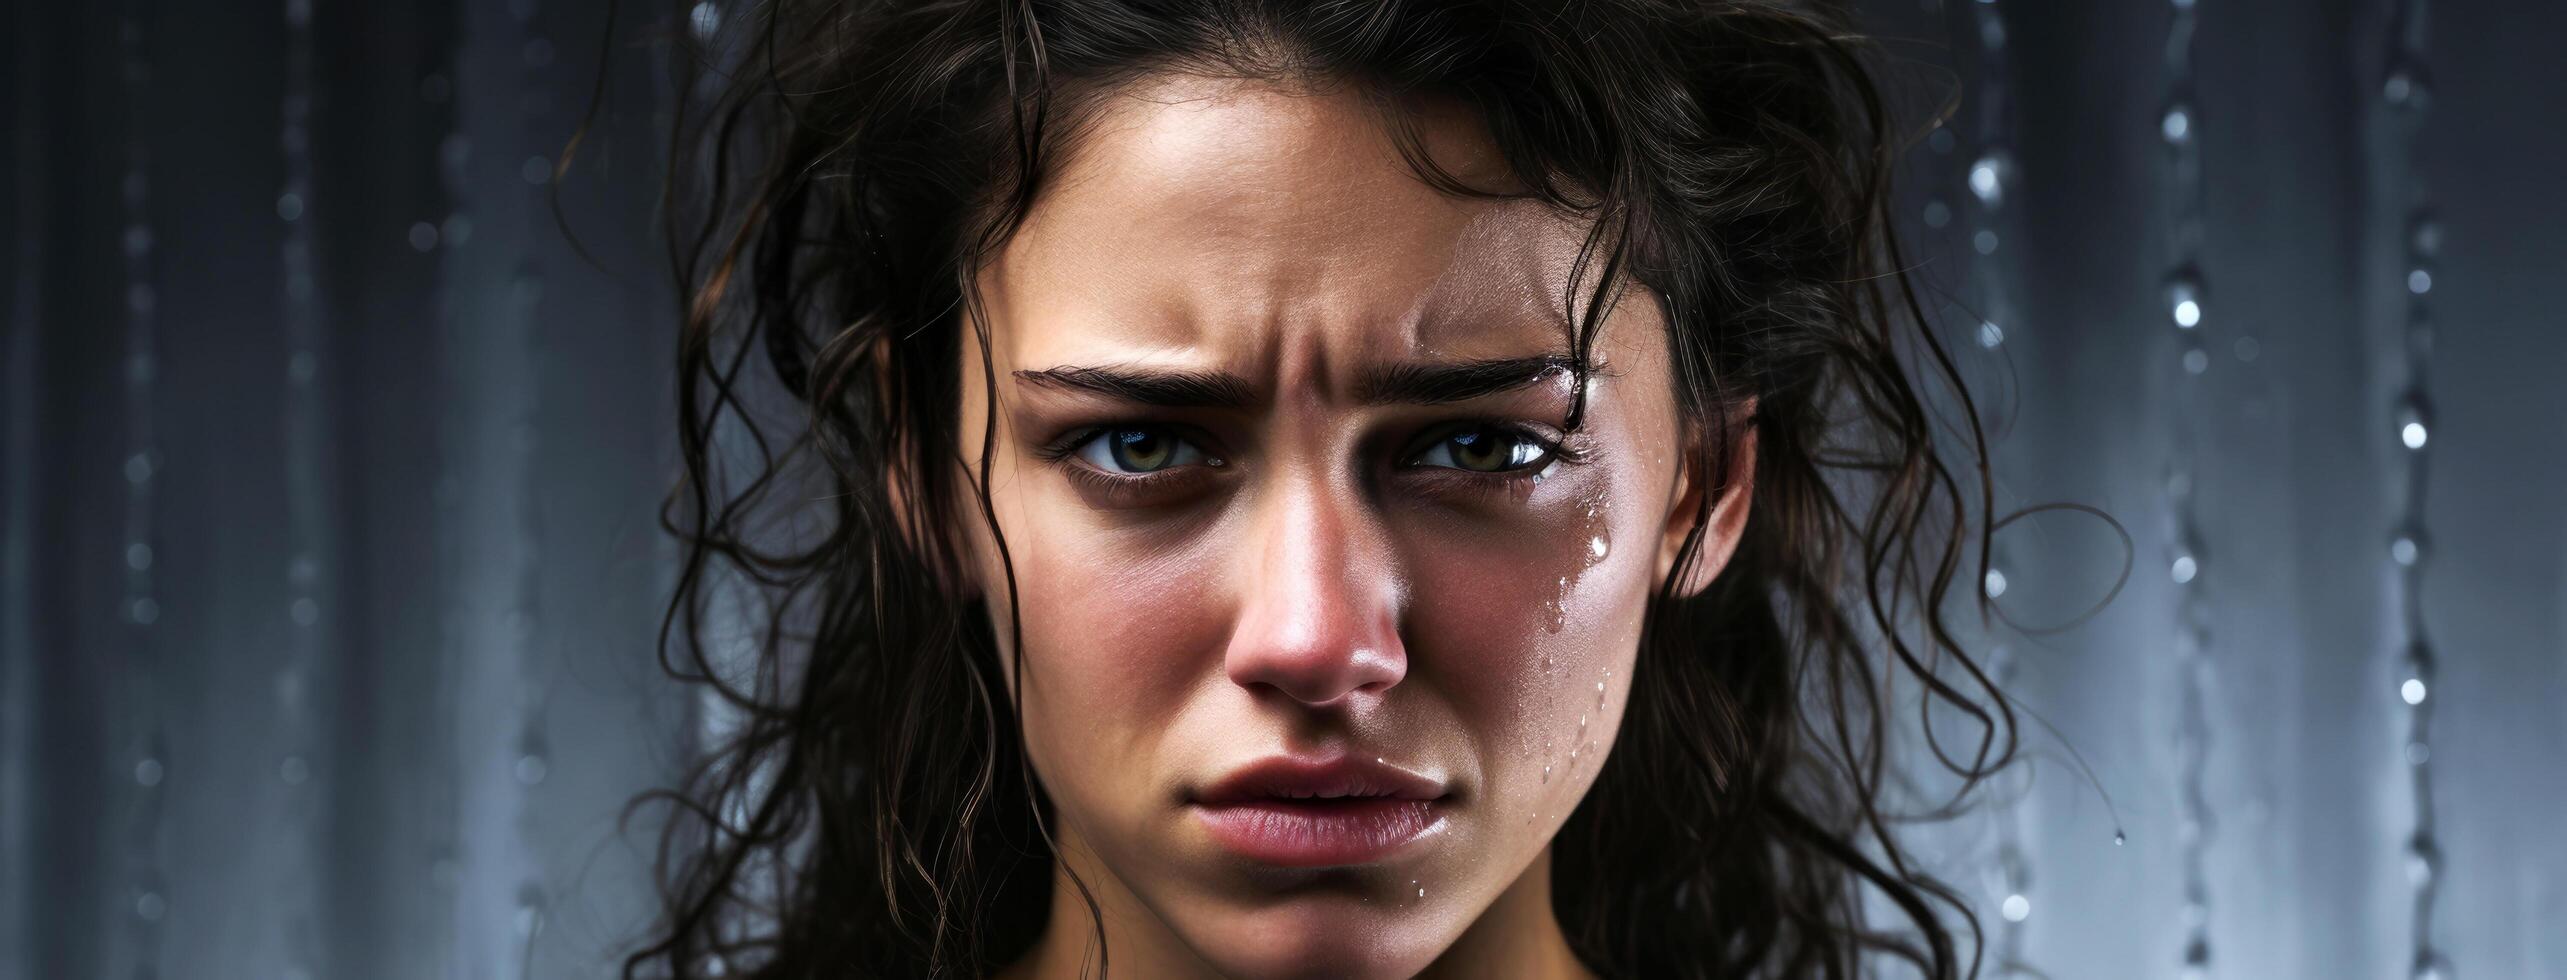 AI generated Tearful Woman with Rainy Window Background photo